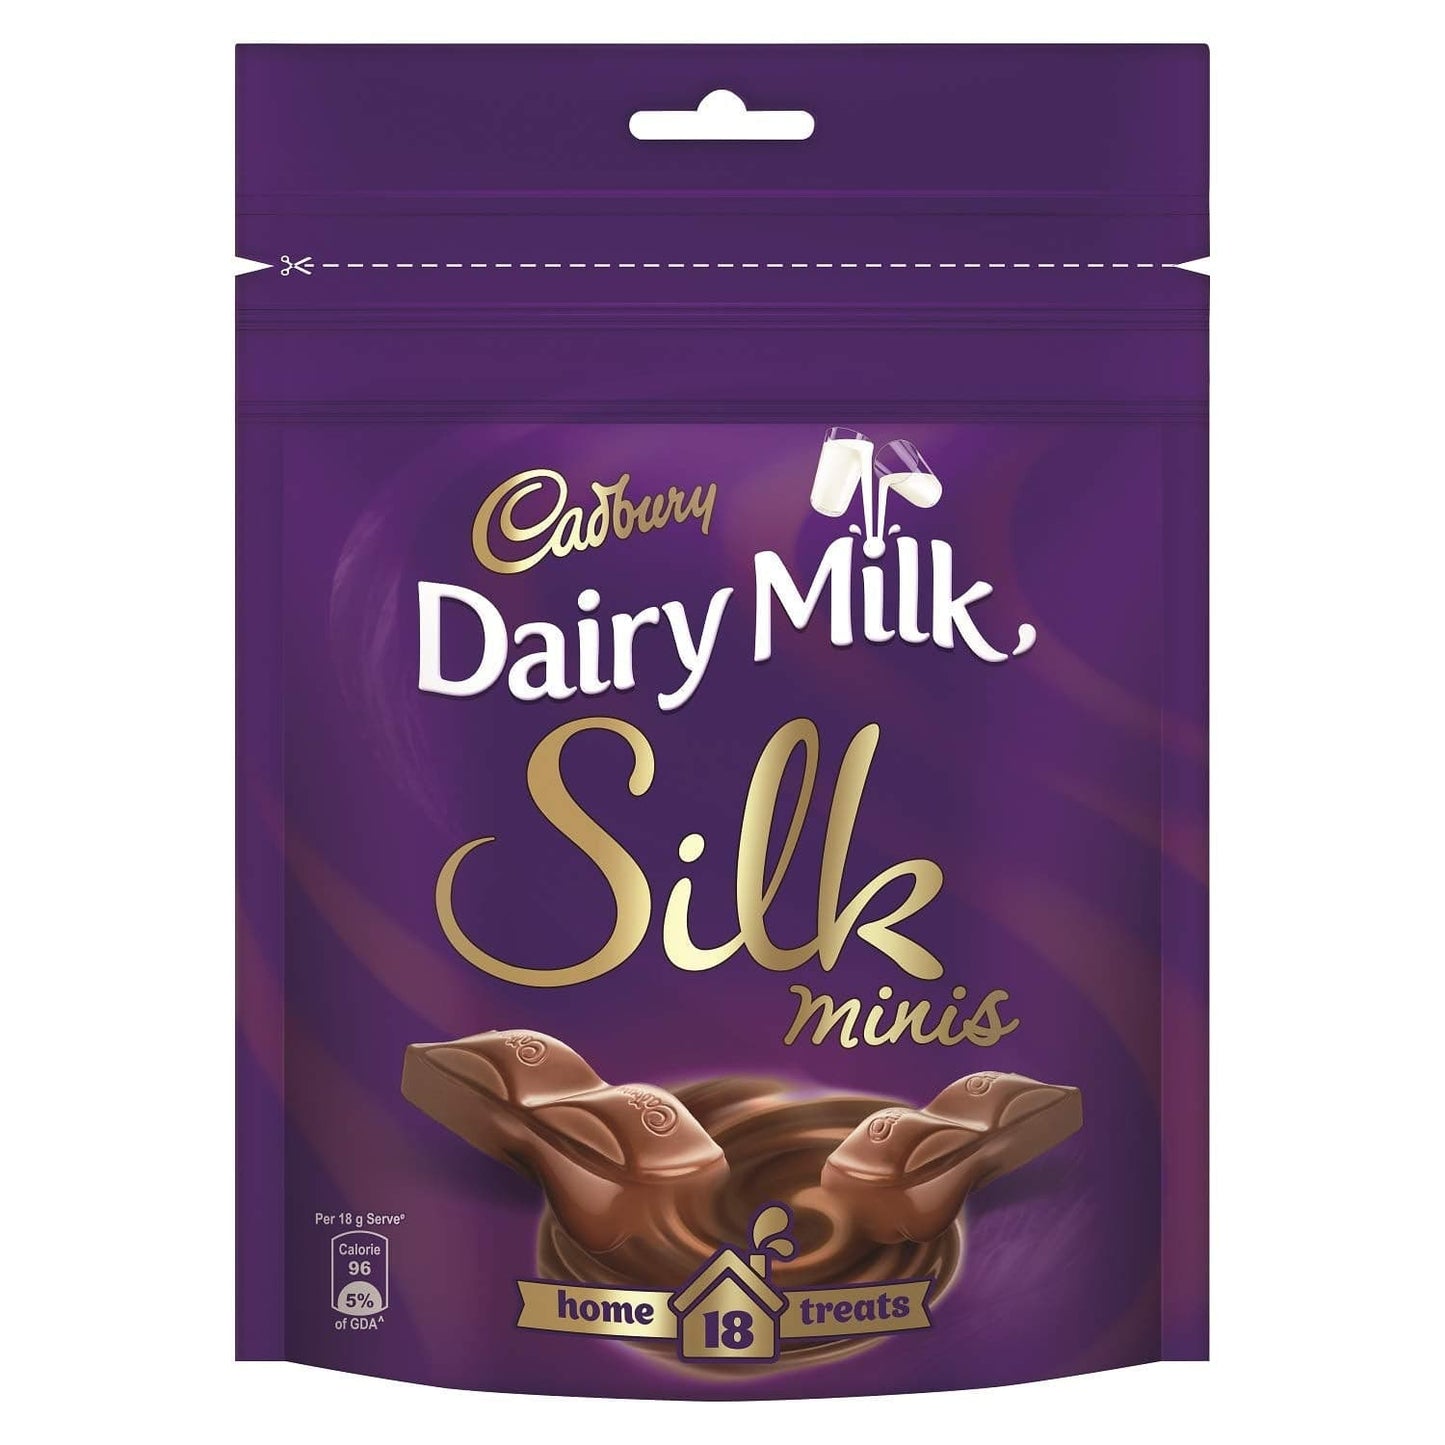 Cadbury DairyMilk Silk Minis Home Treats Pack.